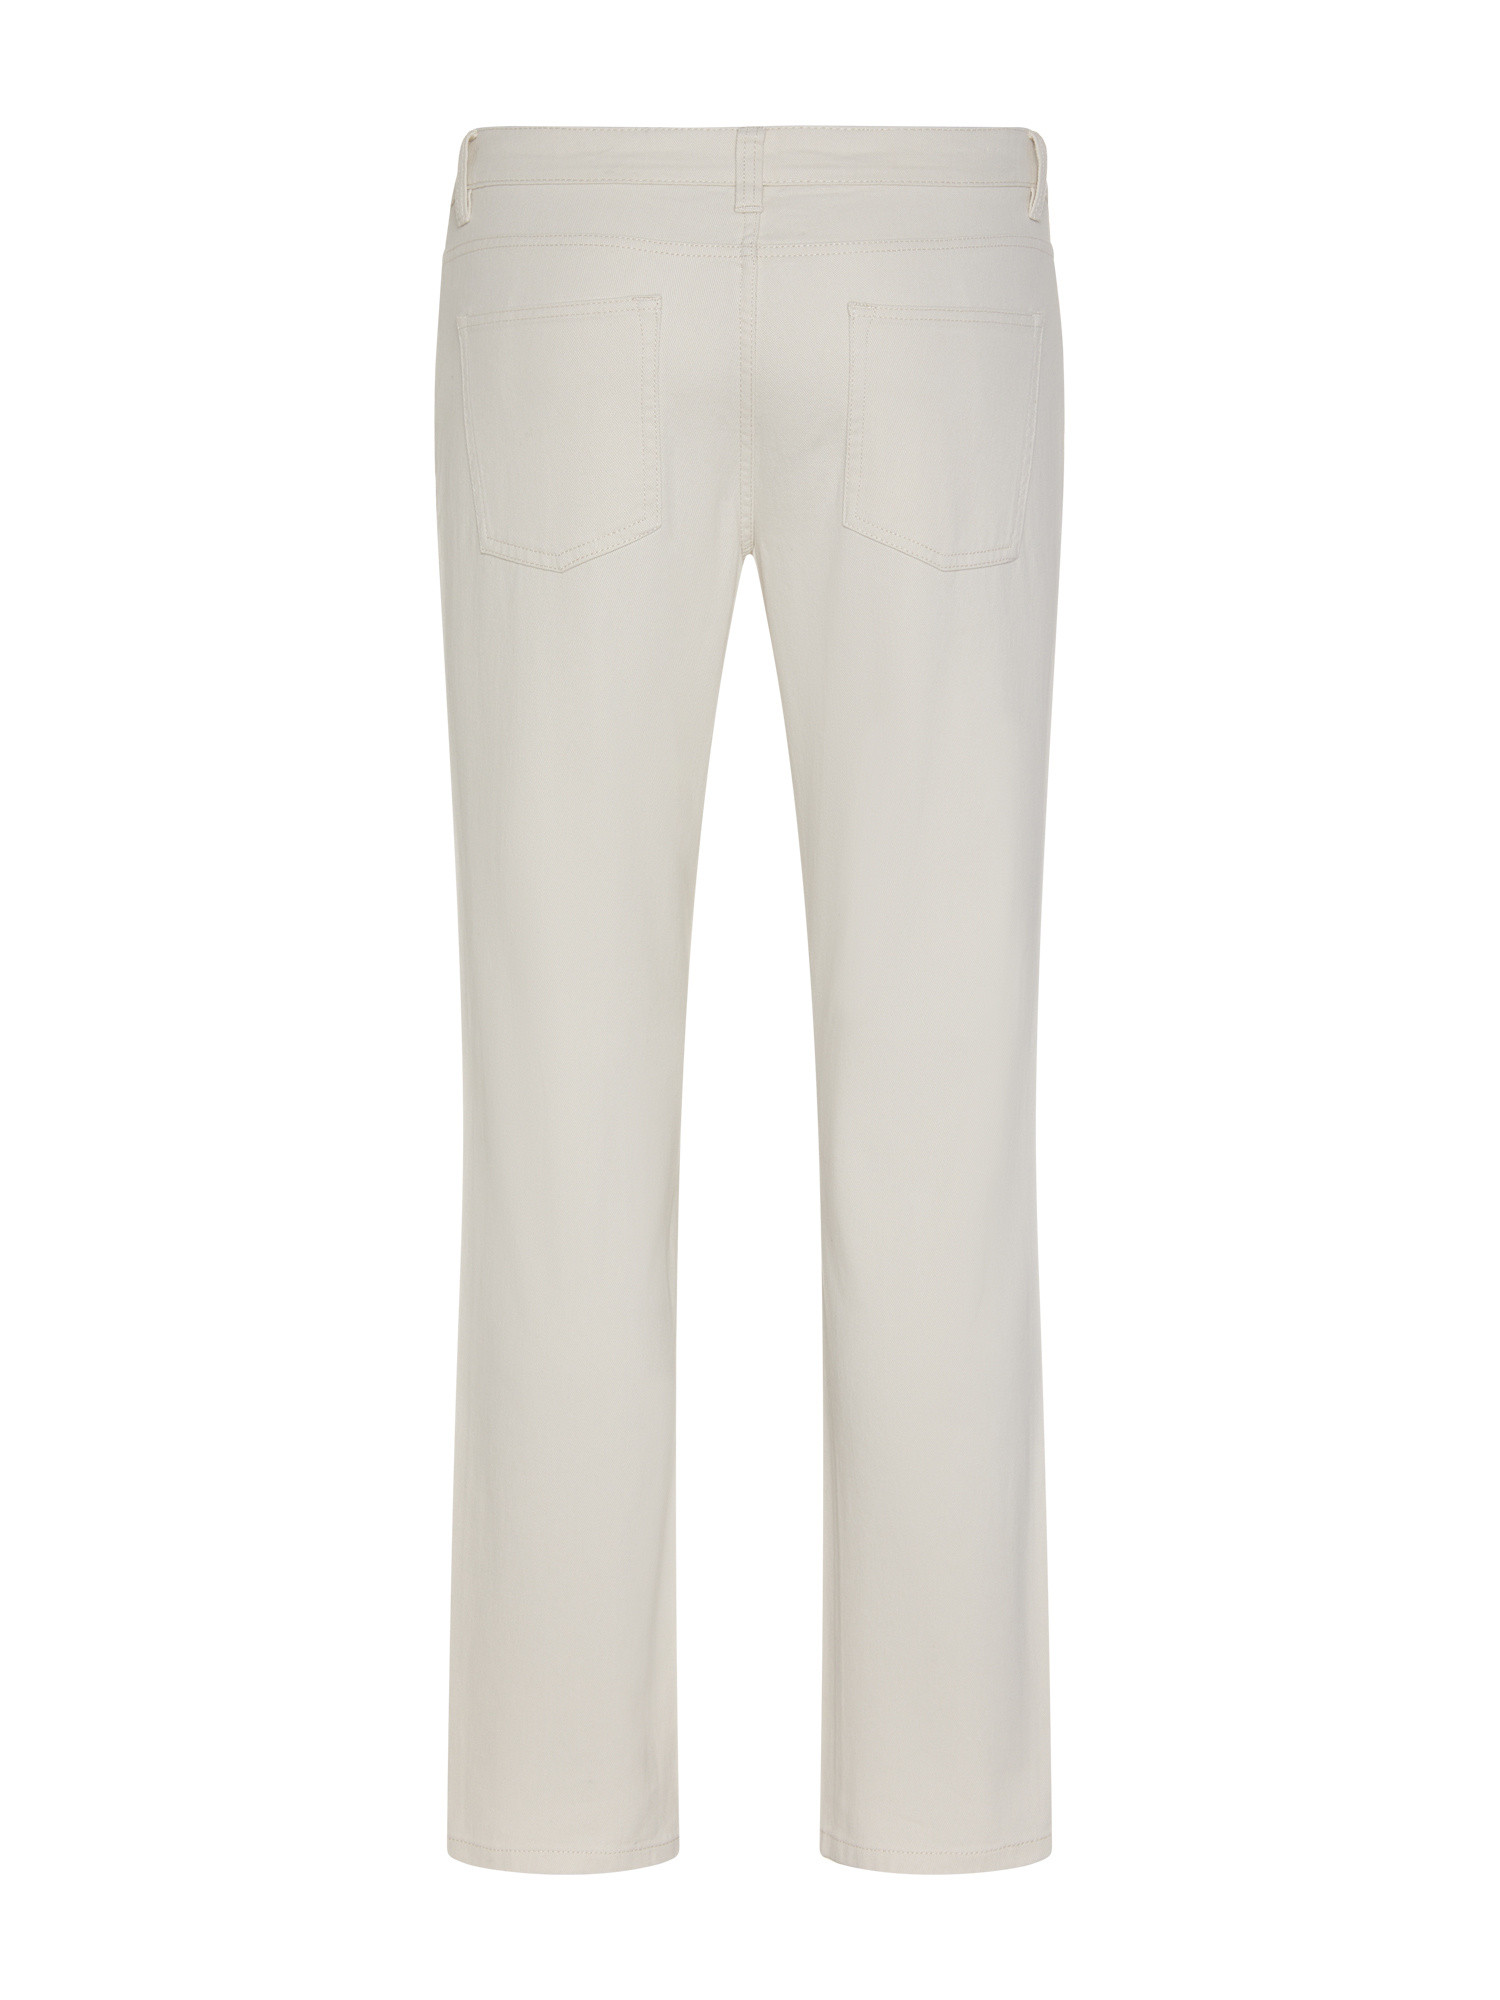 JCT - Pantaloni regular fit cinque tasche in puro cotone, Bianco panna, large image number 1